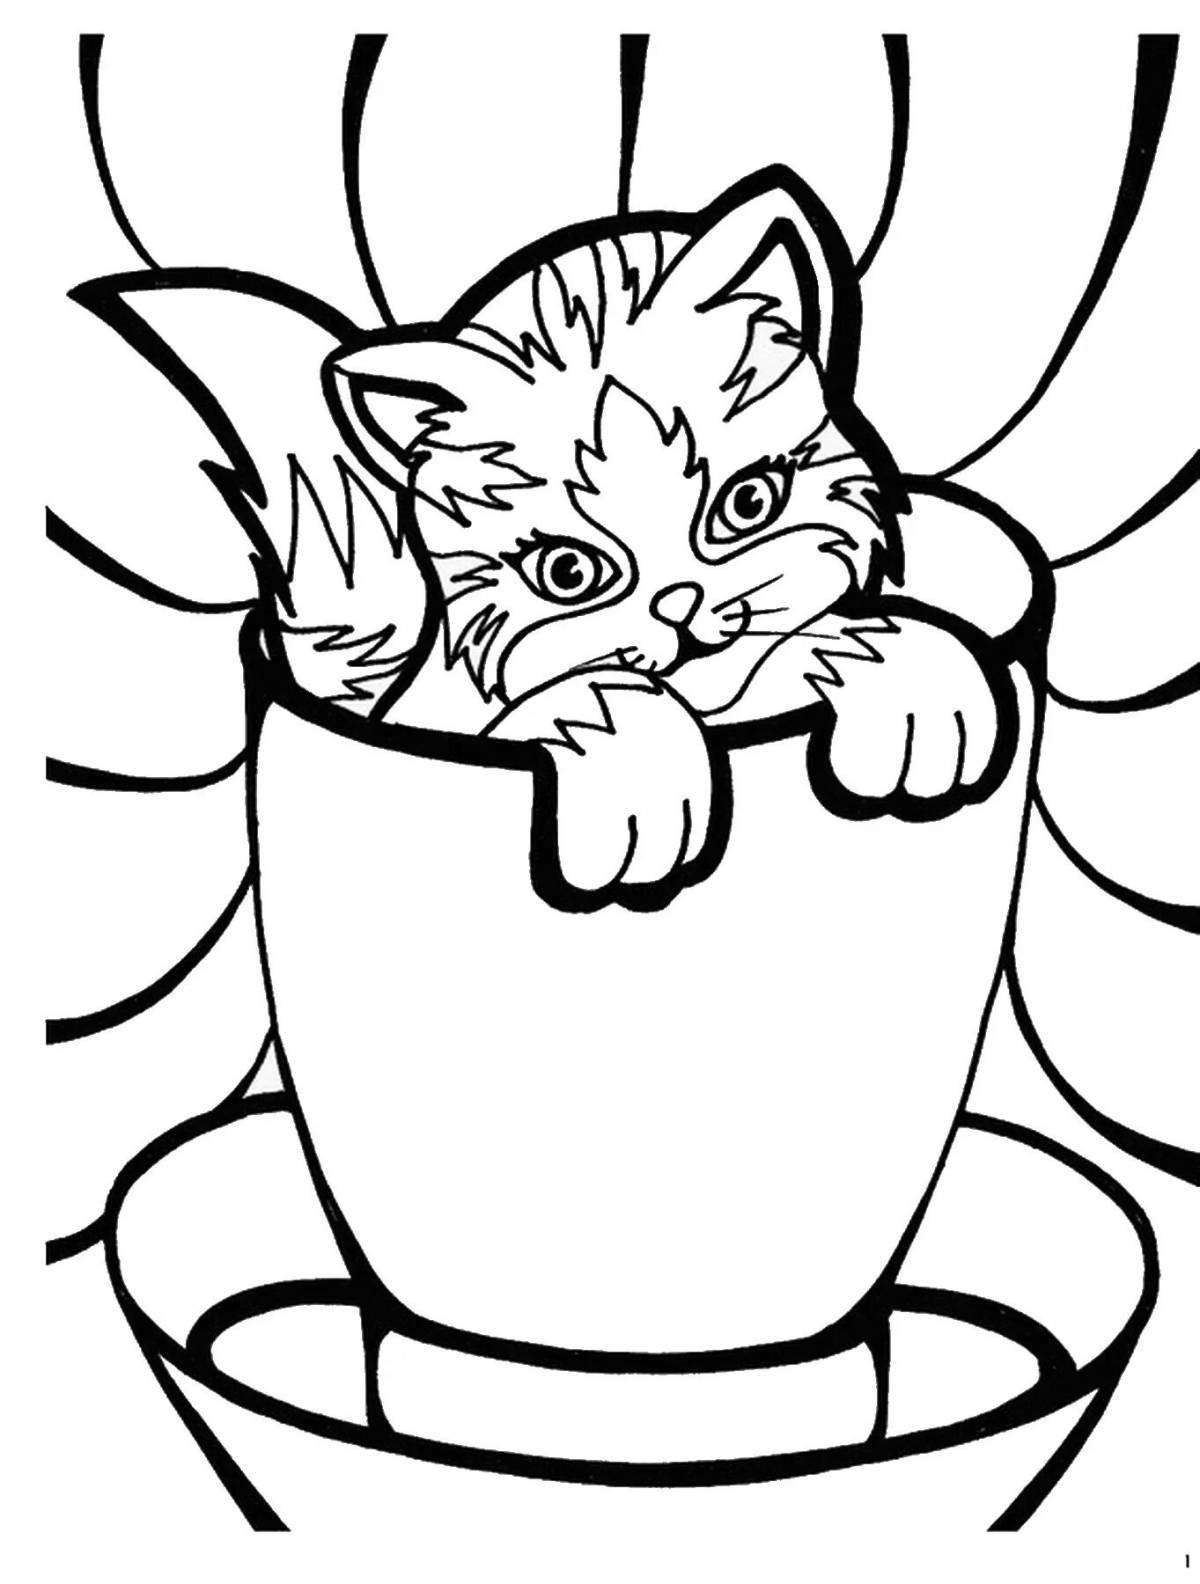 Adorable cat in a mug coloring book